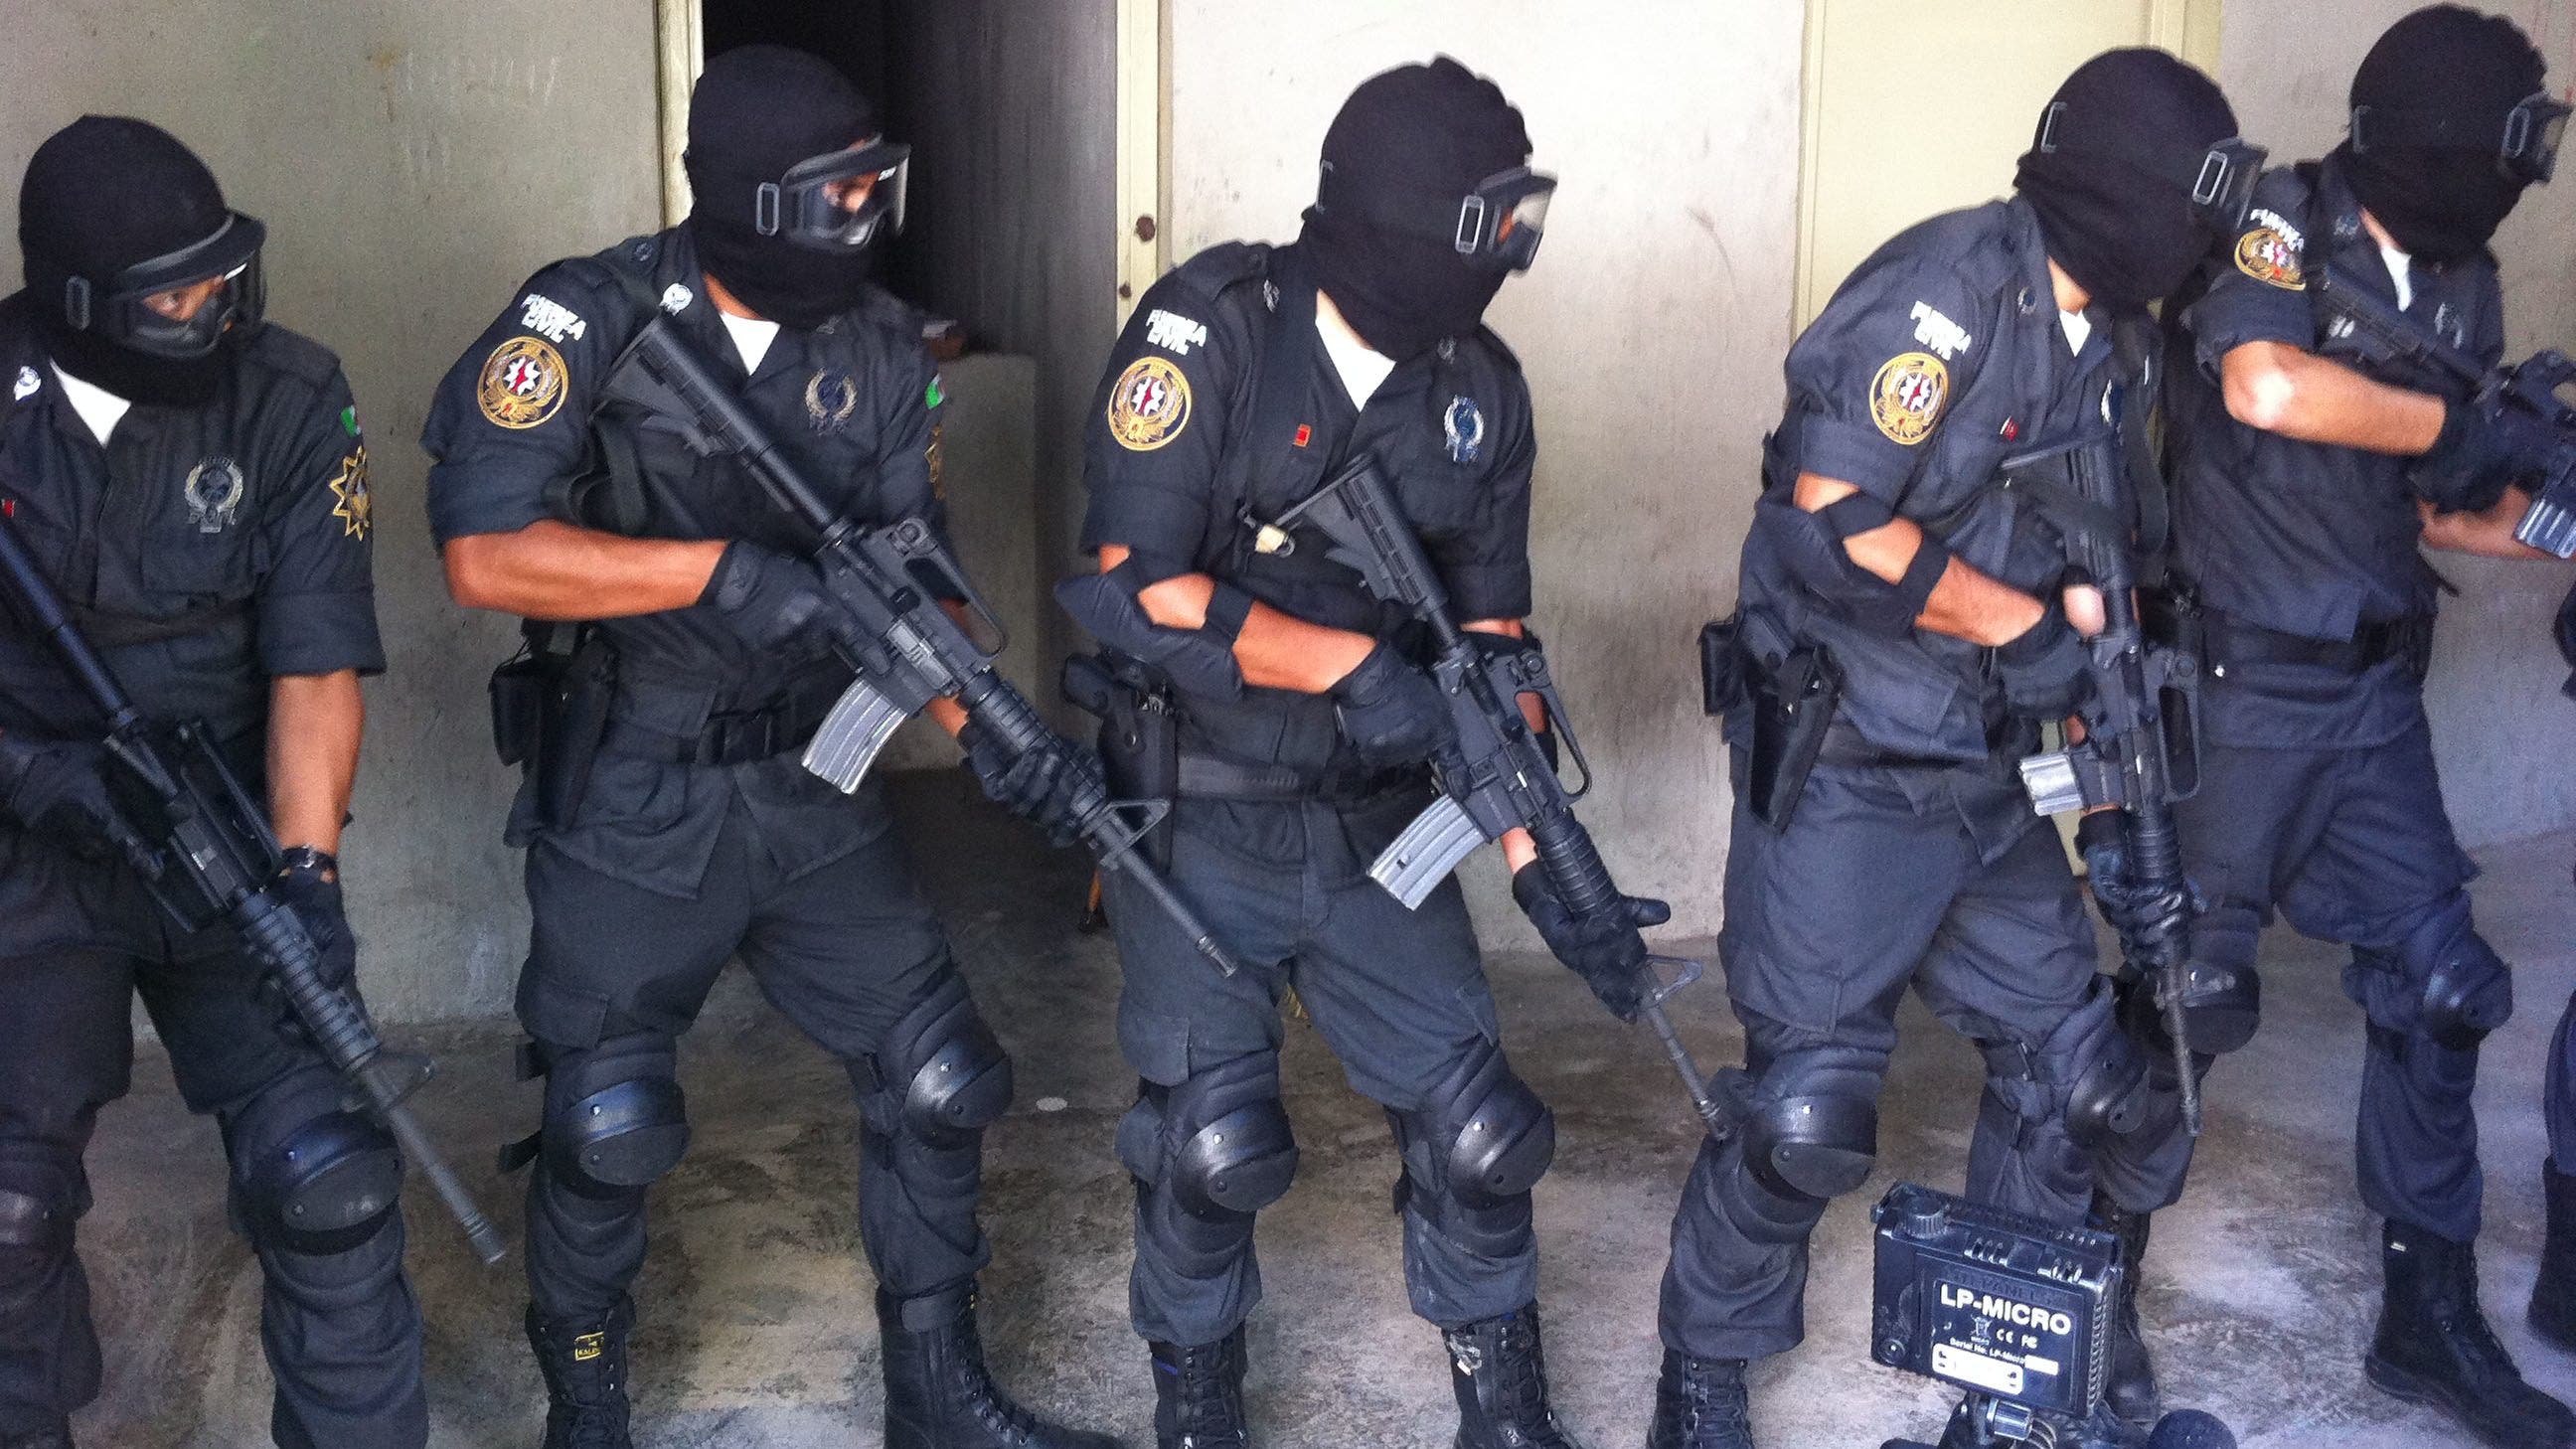 Fuerza Civil Police Academy Training